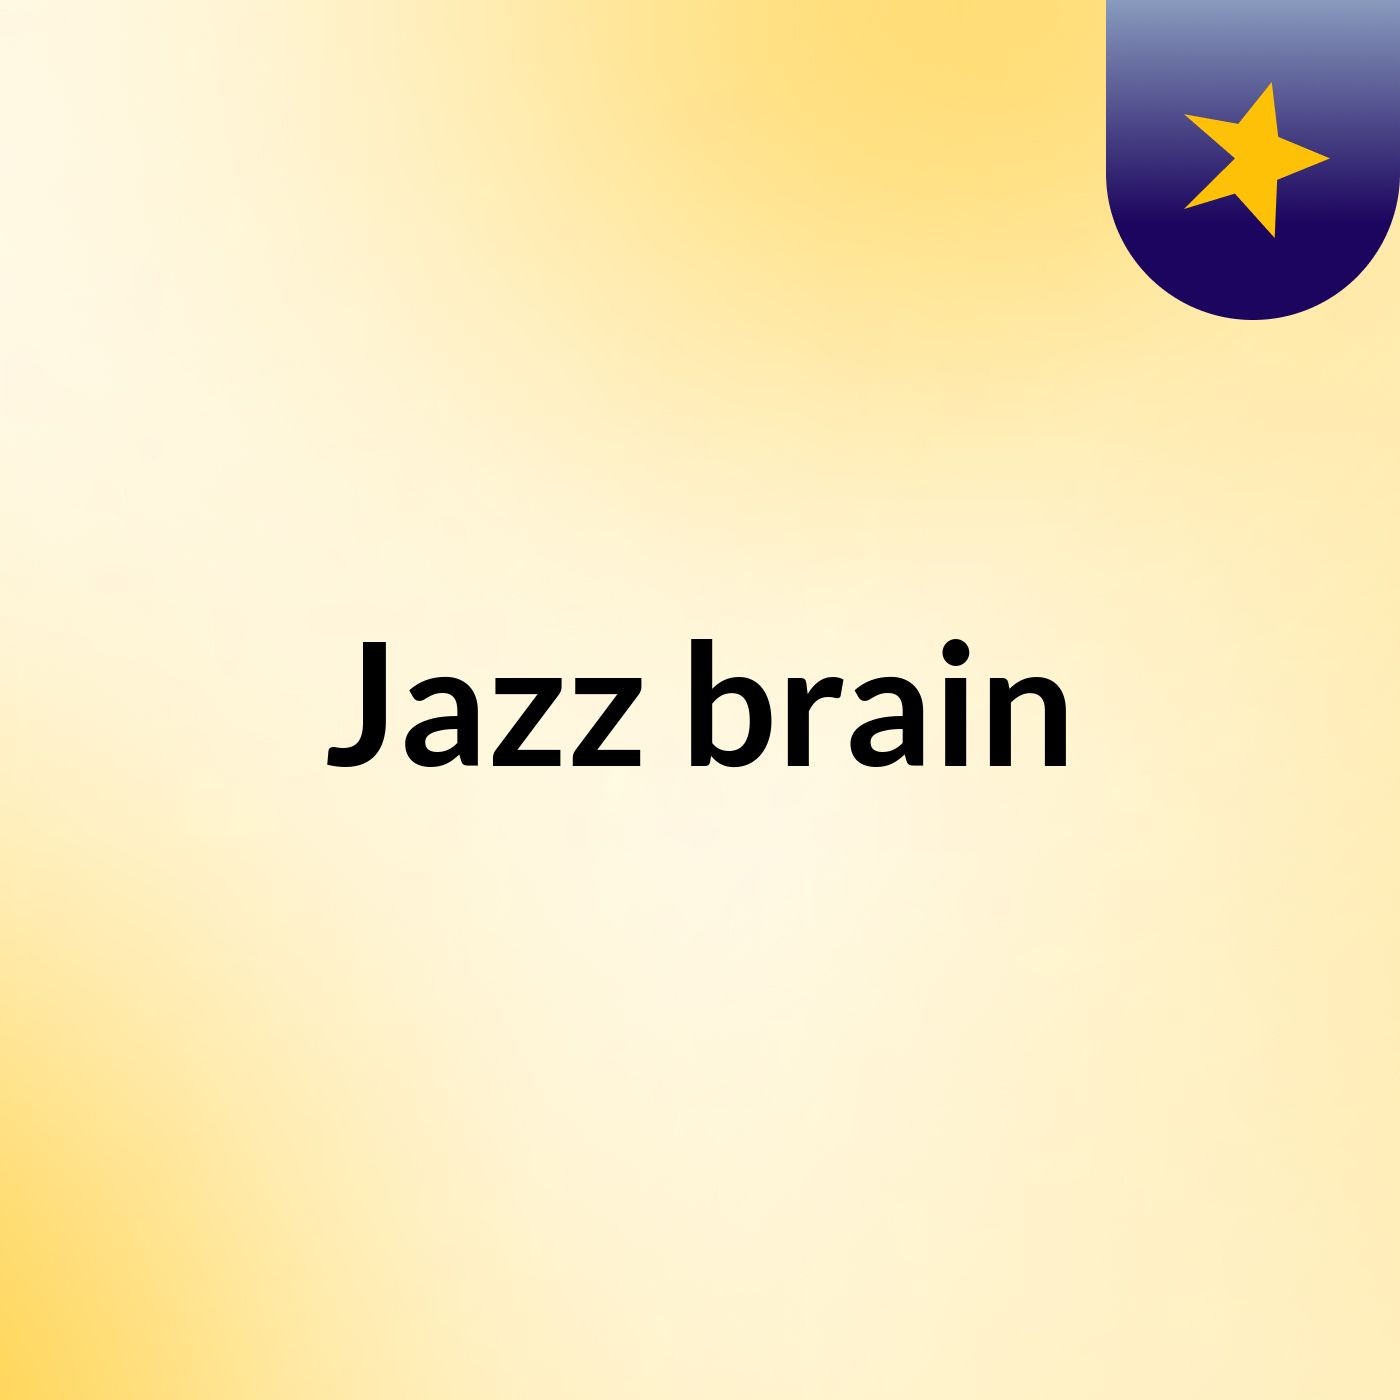 Jazz brain